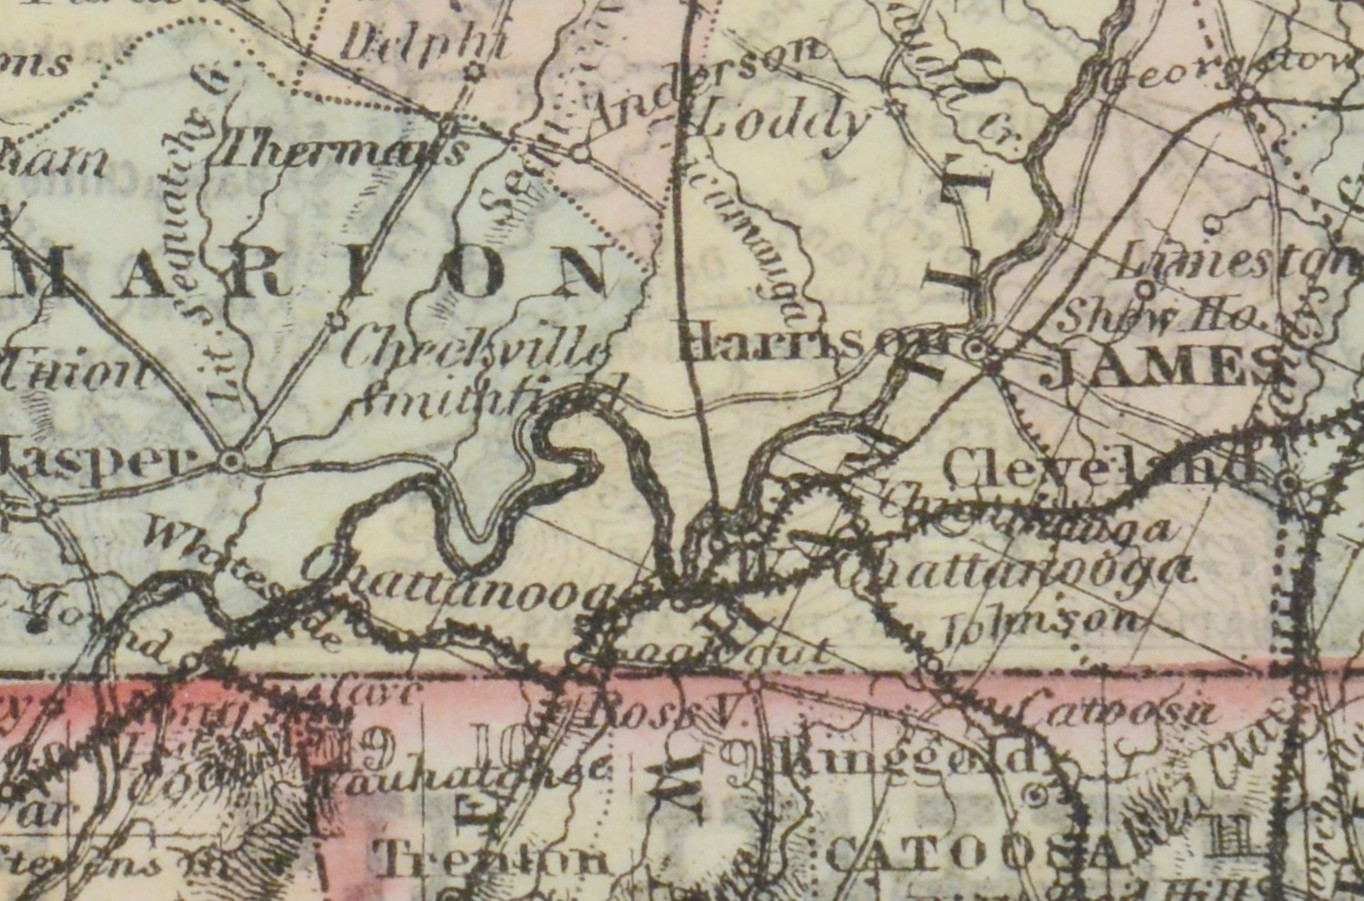 Lot 286: Tennessee Railroad Map, 1873